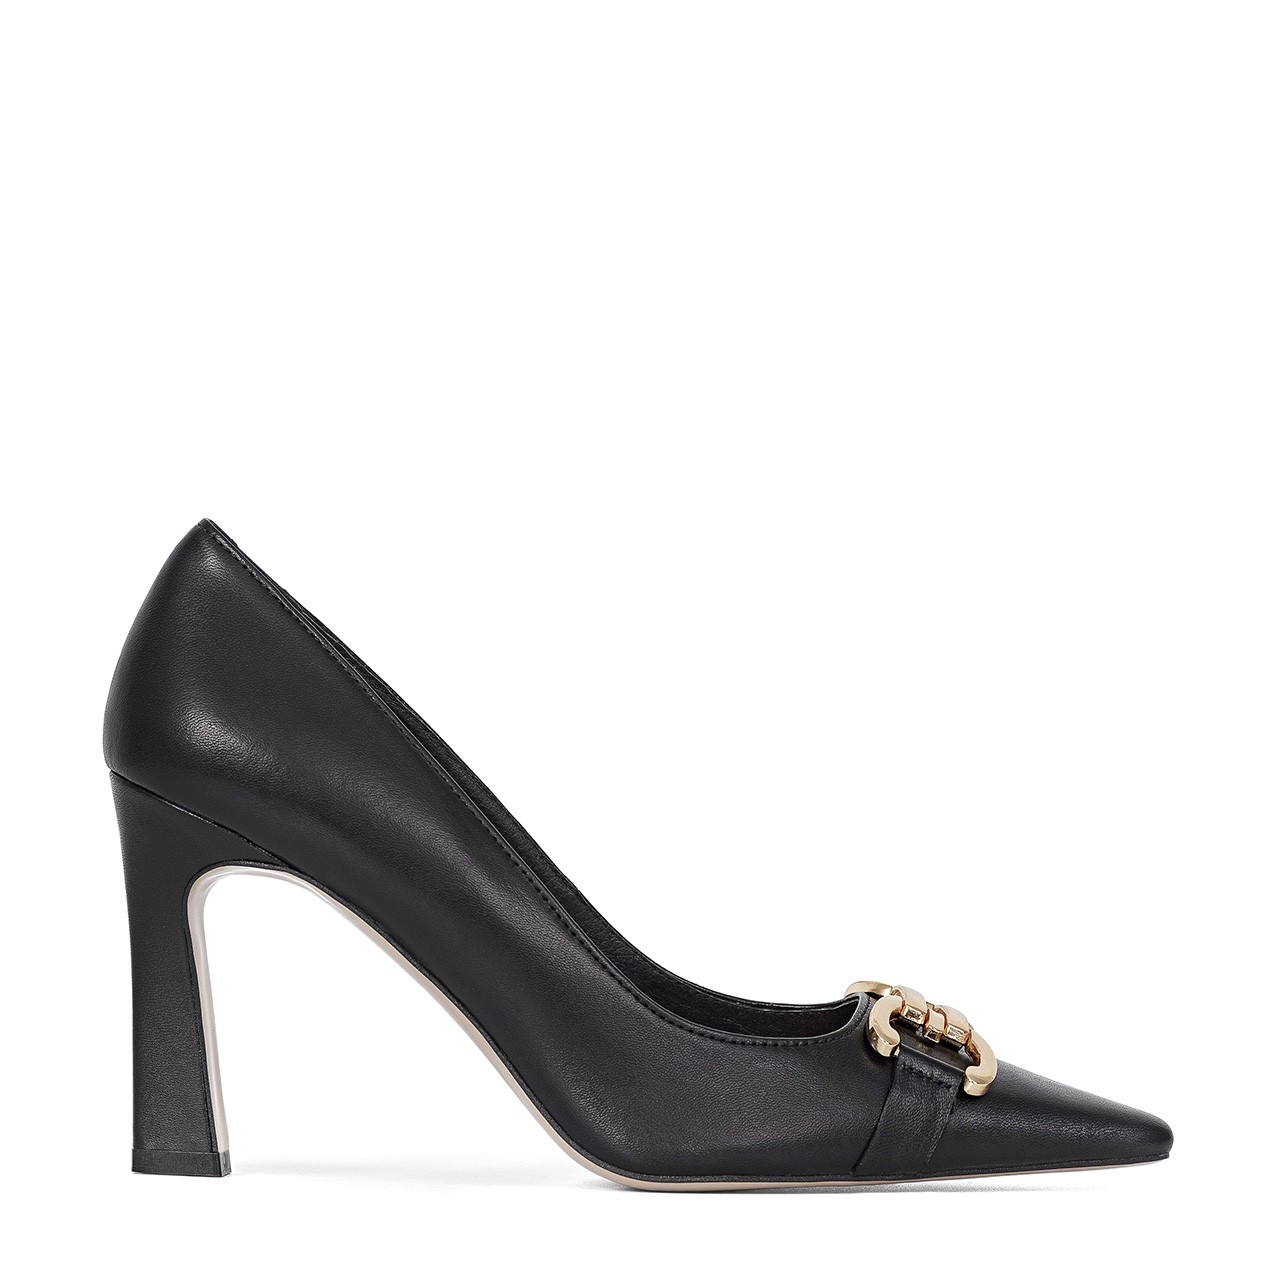 Designer Shoes | Milana - Leather High Heel Sandals | Italian Leather